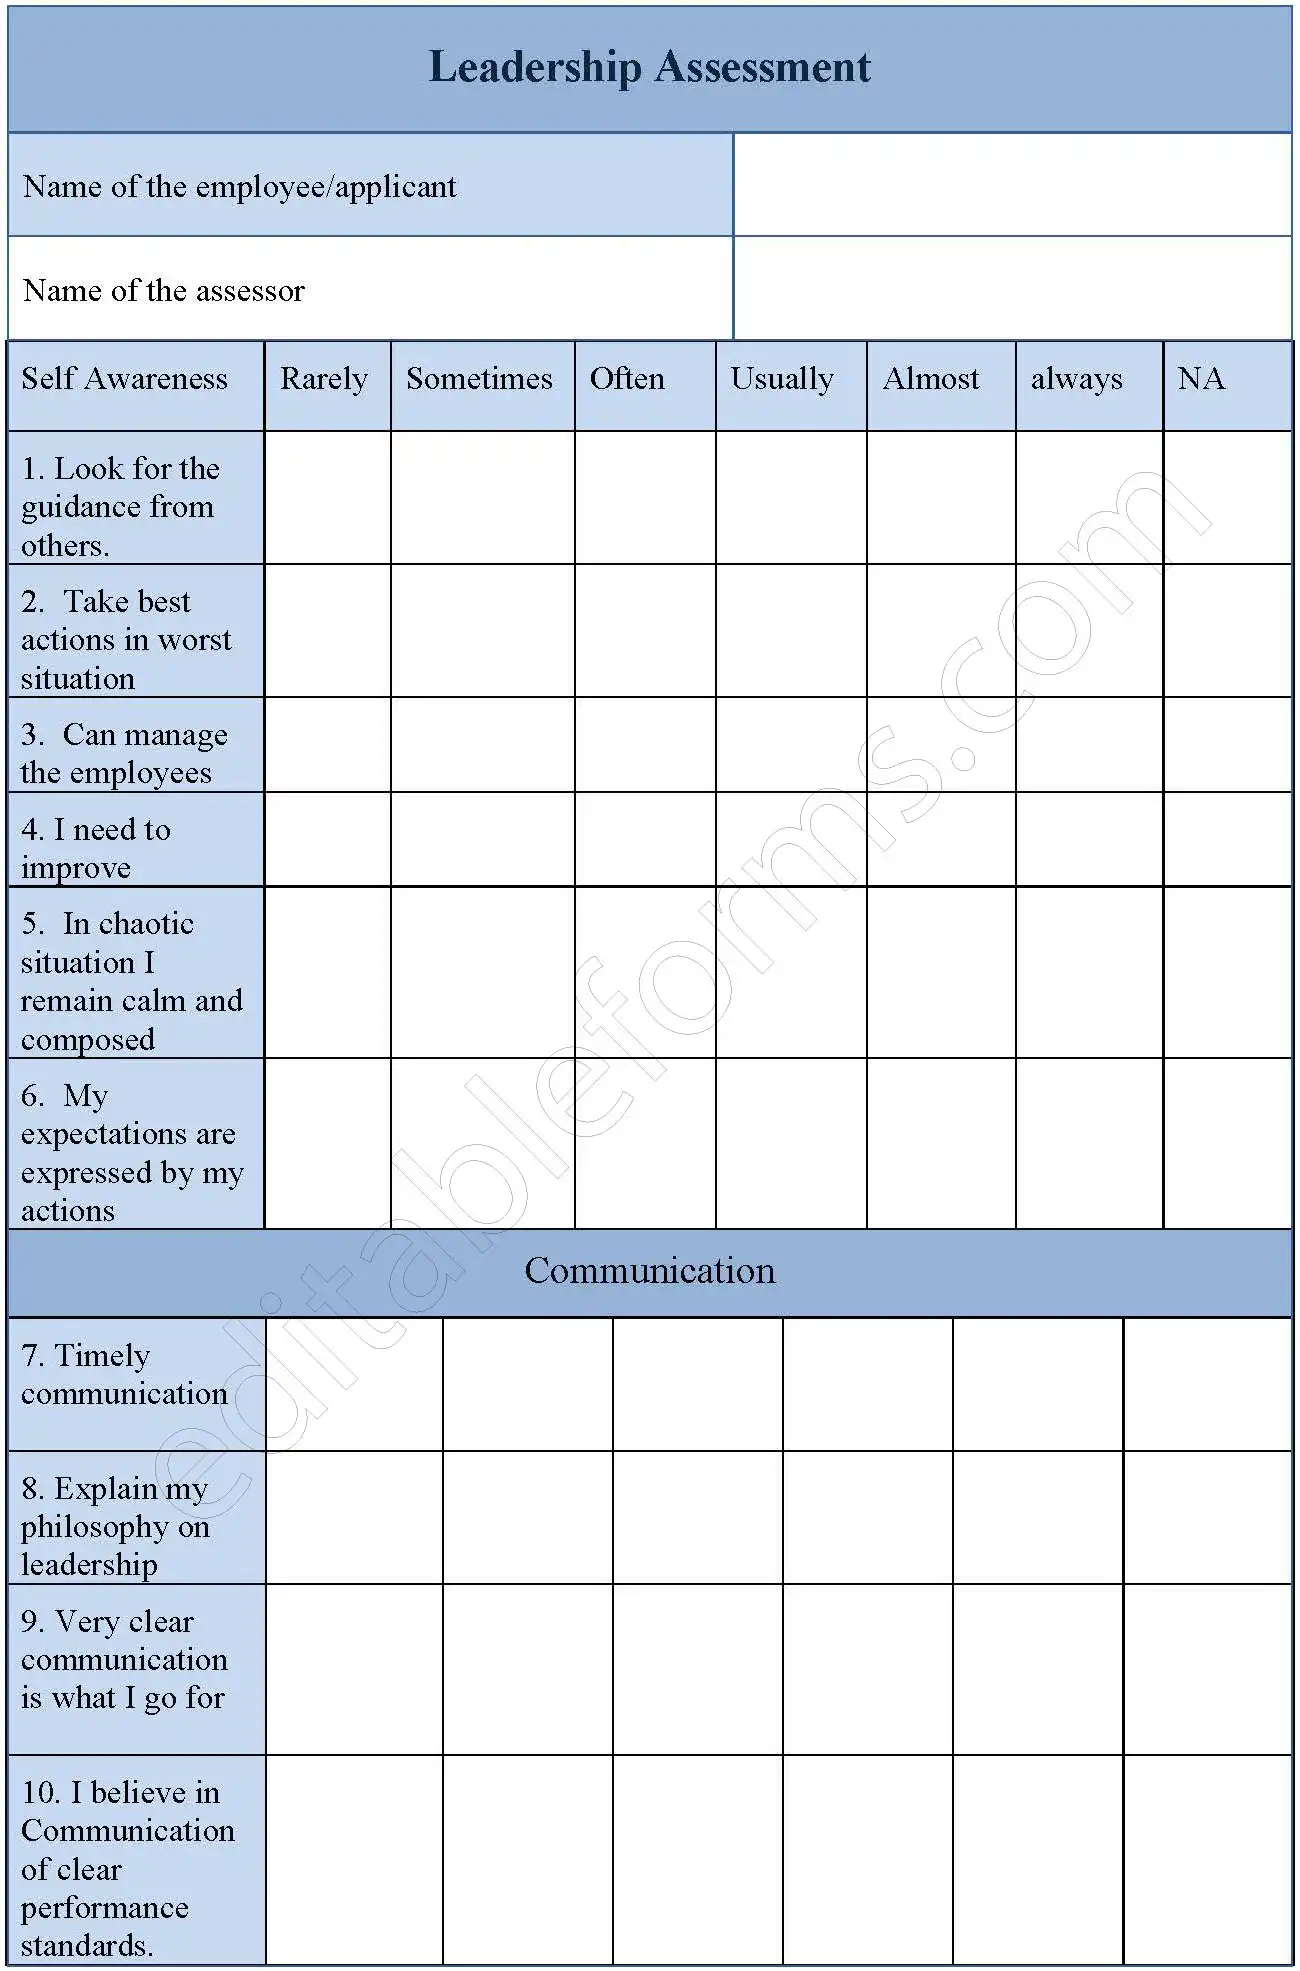 Leadership Assessment Fillable PDF Form